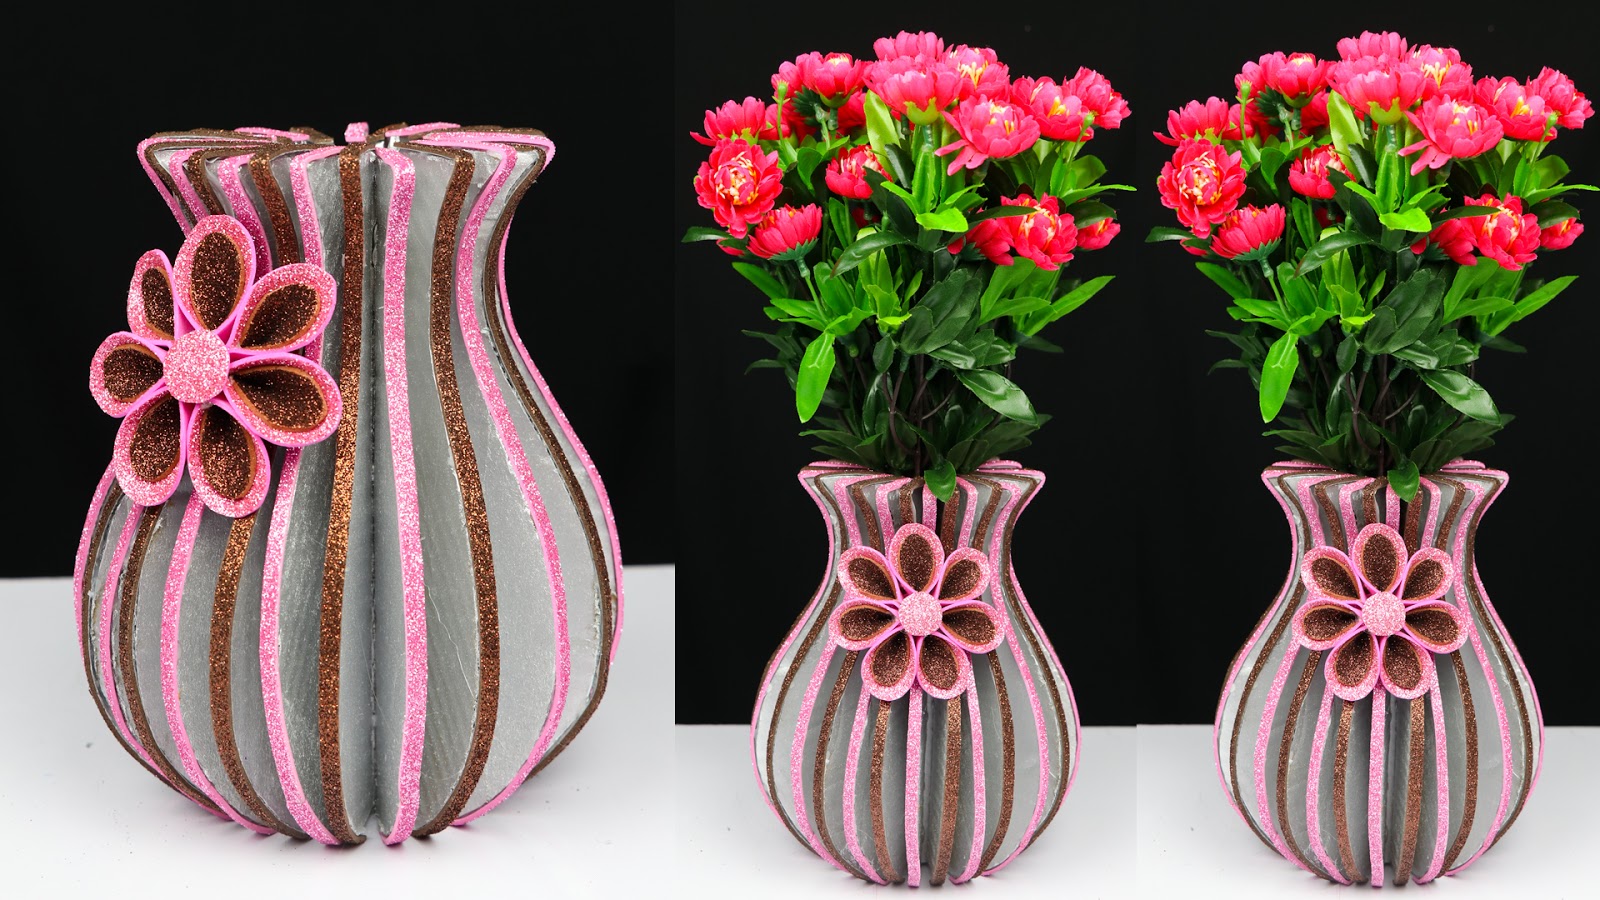 How to make a flower vase at home | sb crafts